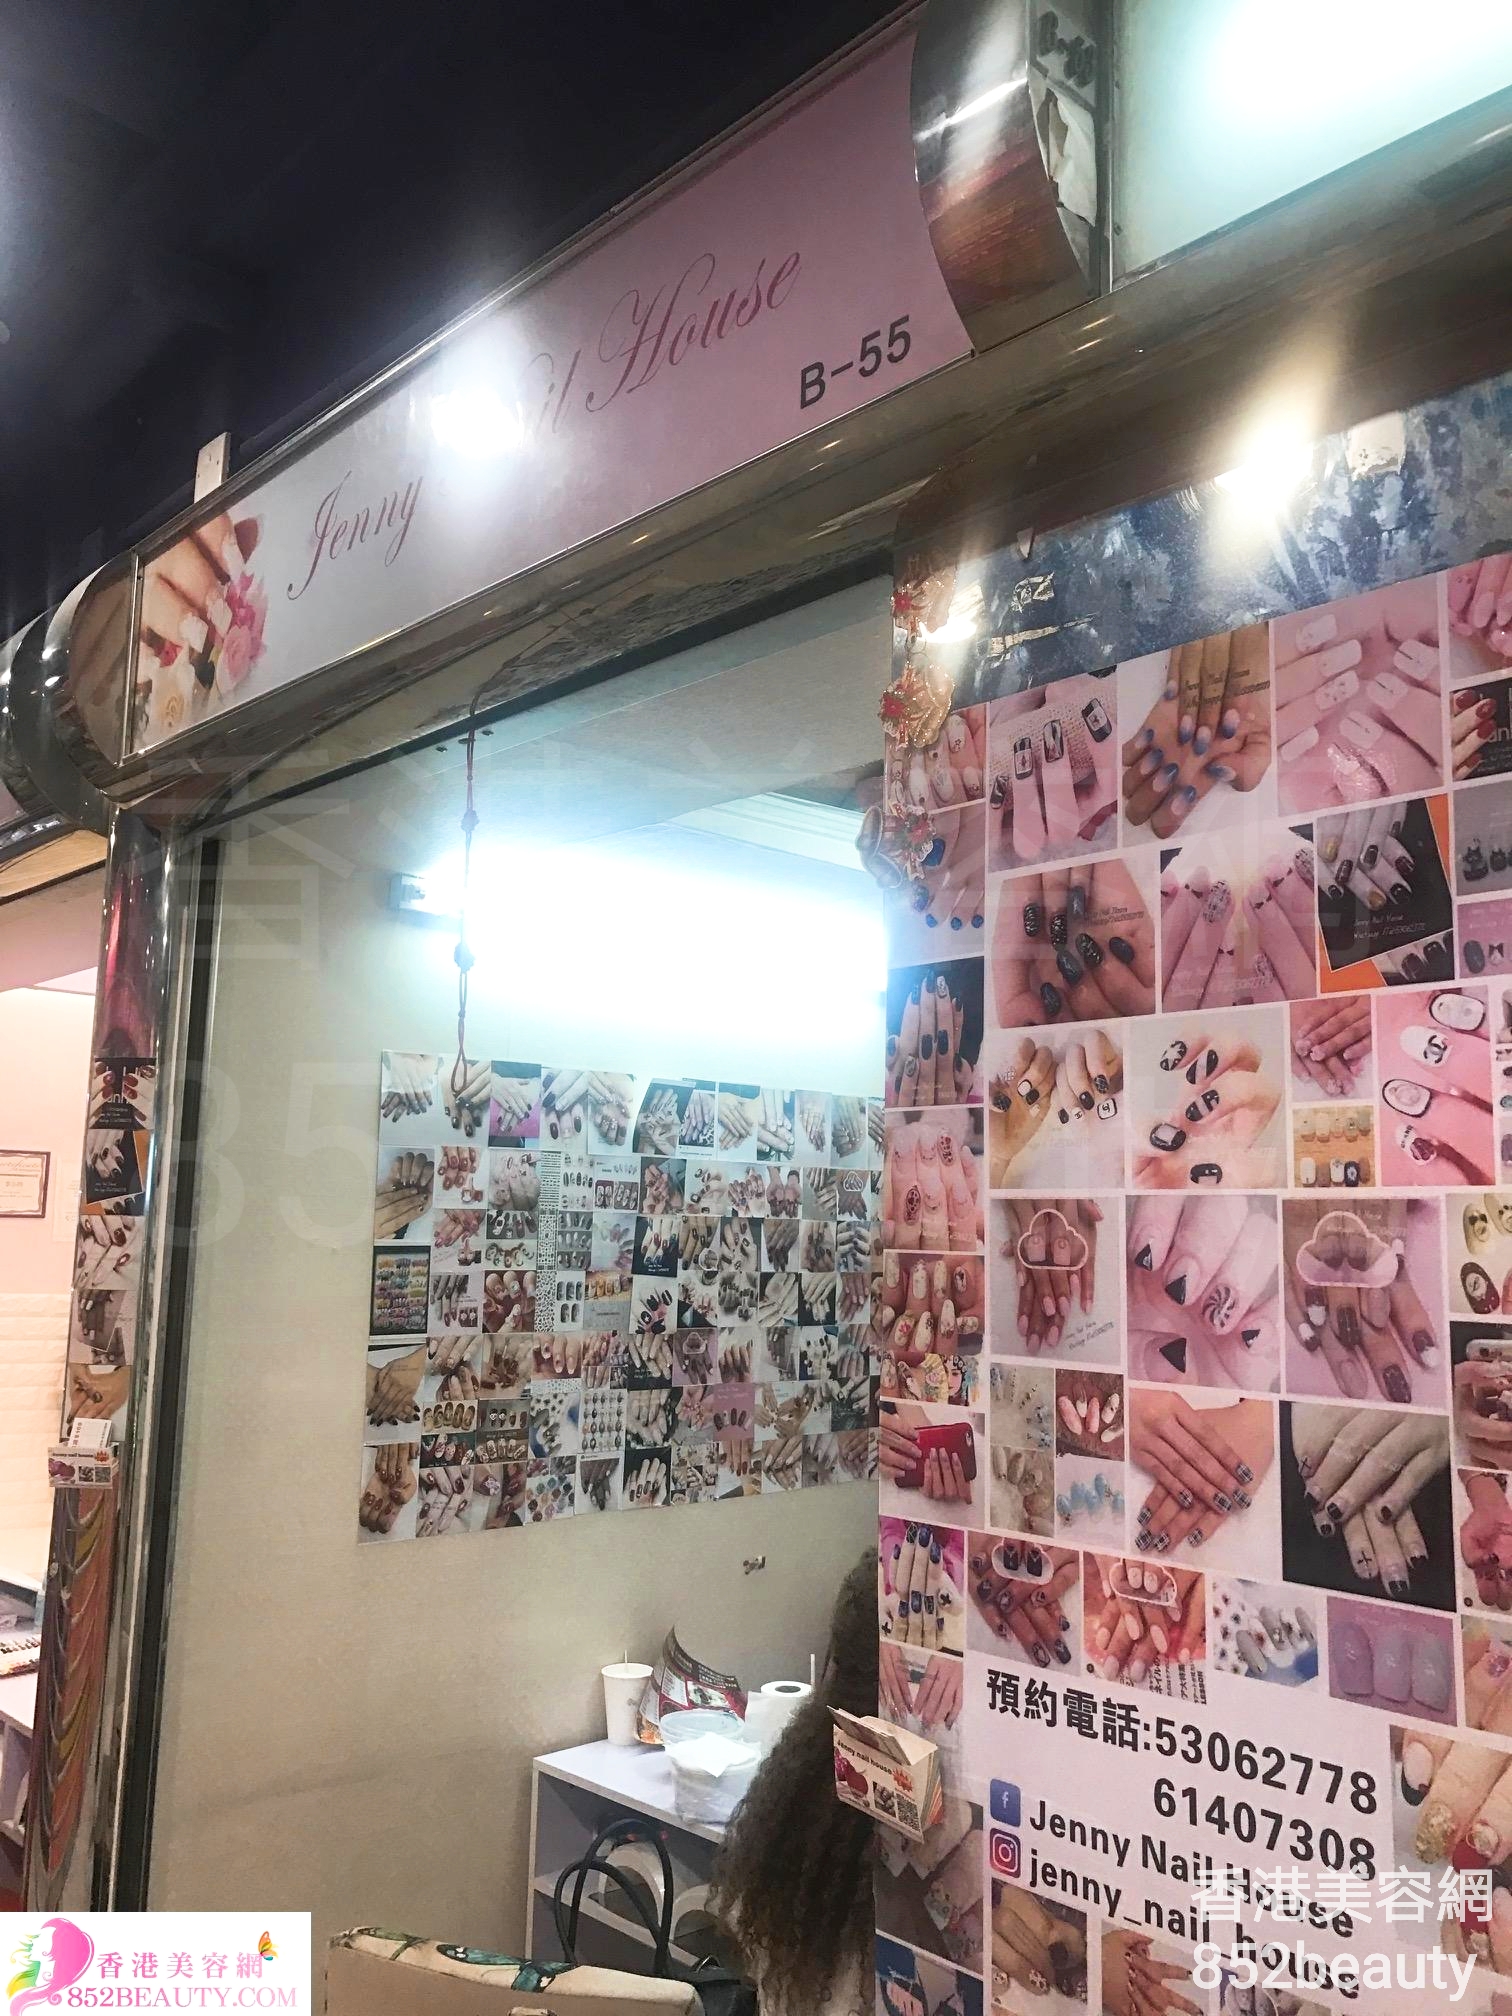 香港美容網 Hong Kong Beauty Salon 美容院 / 美容師: Jenny Nail House